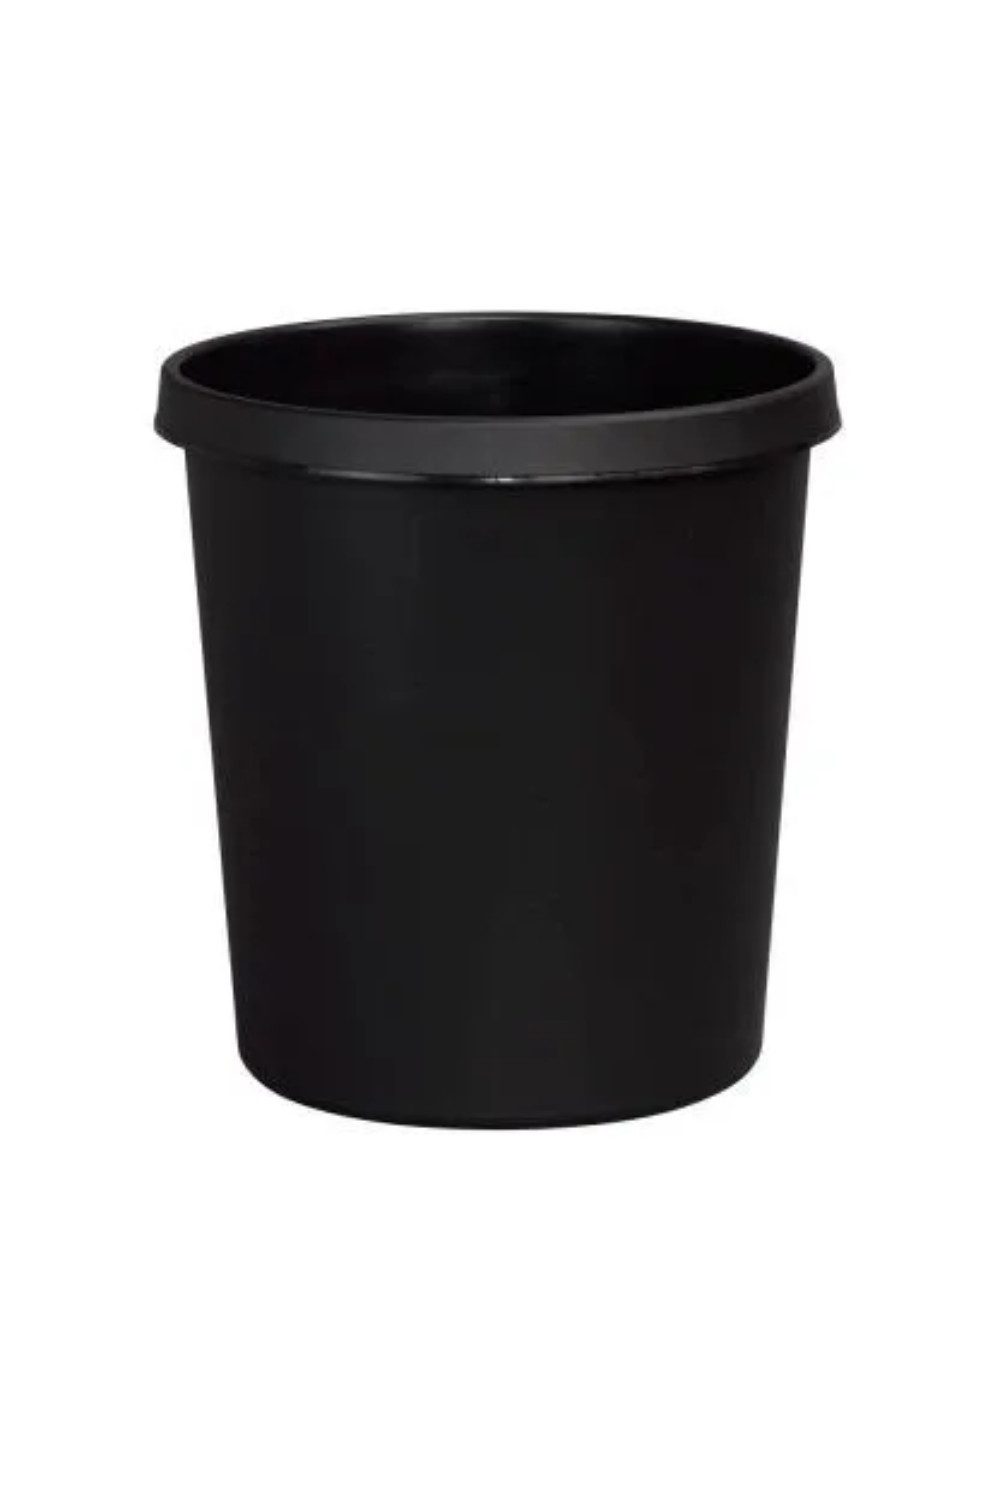 HELIT Papierkorb helit Papierkorb 18,0 l schwarz, aus Recycling-Kunststoff